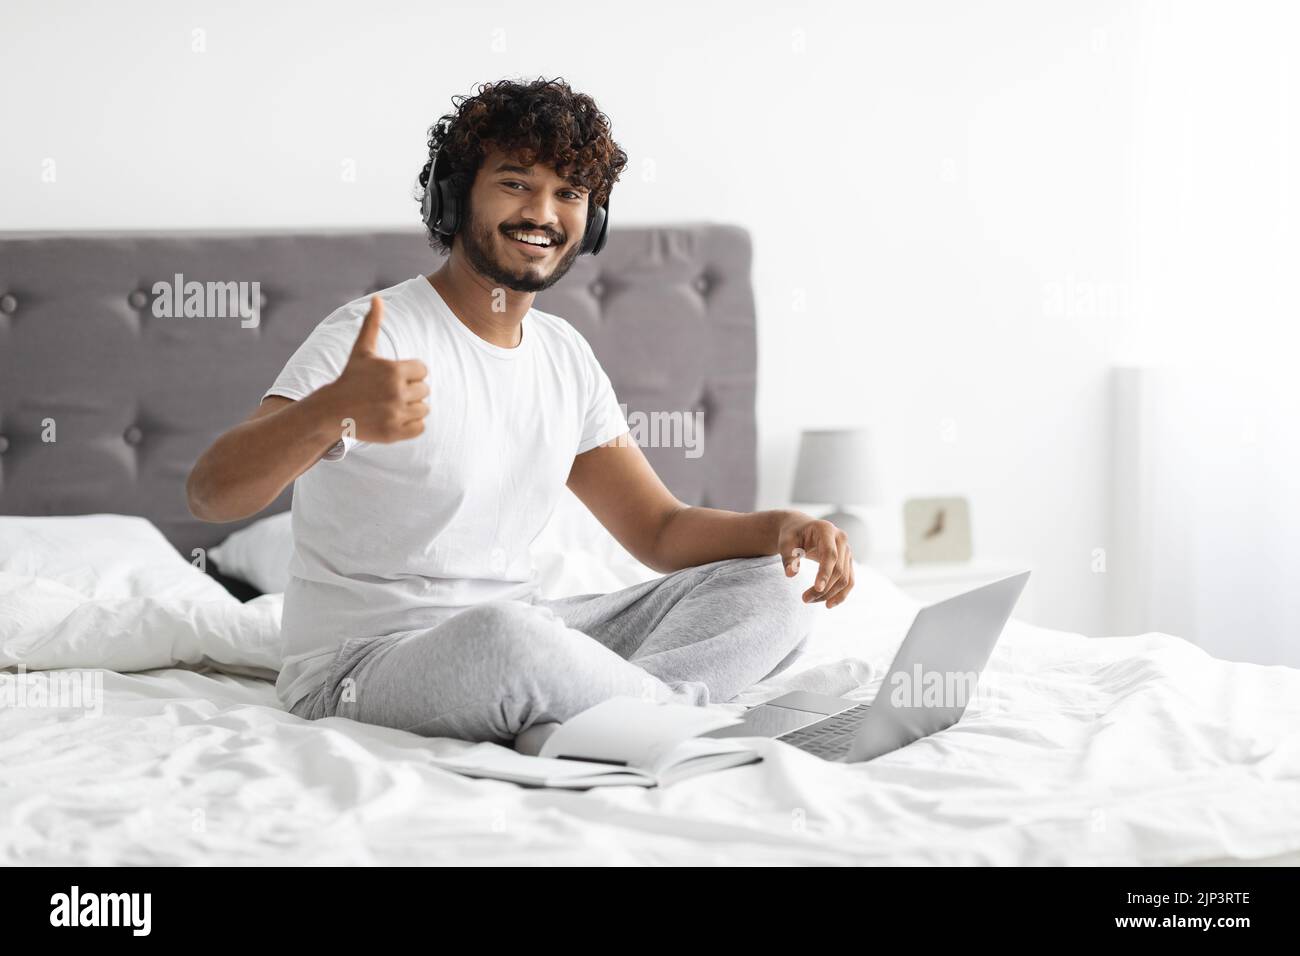 Positive eastern guy attending webinar, bedroom interior Stock Photo